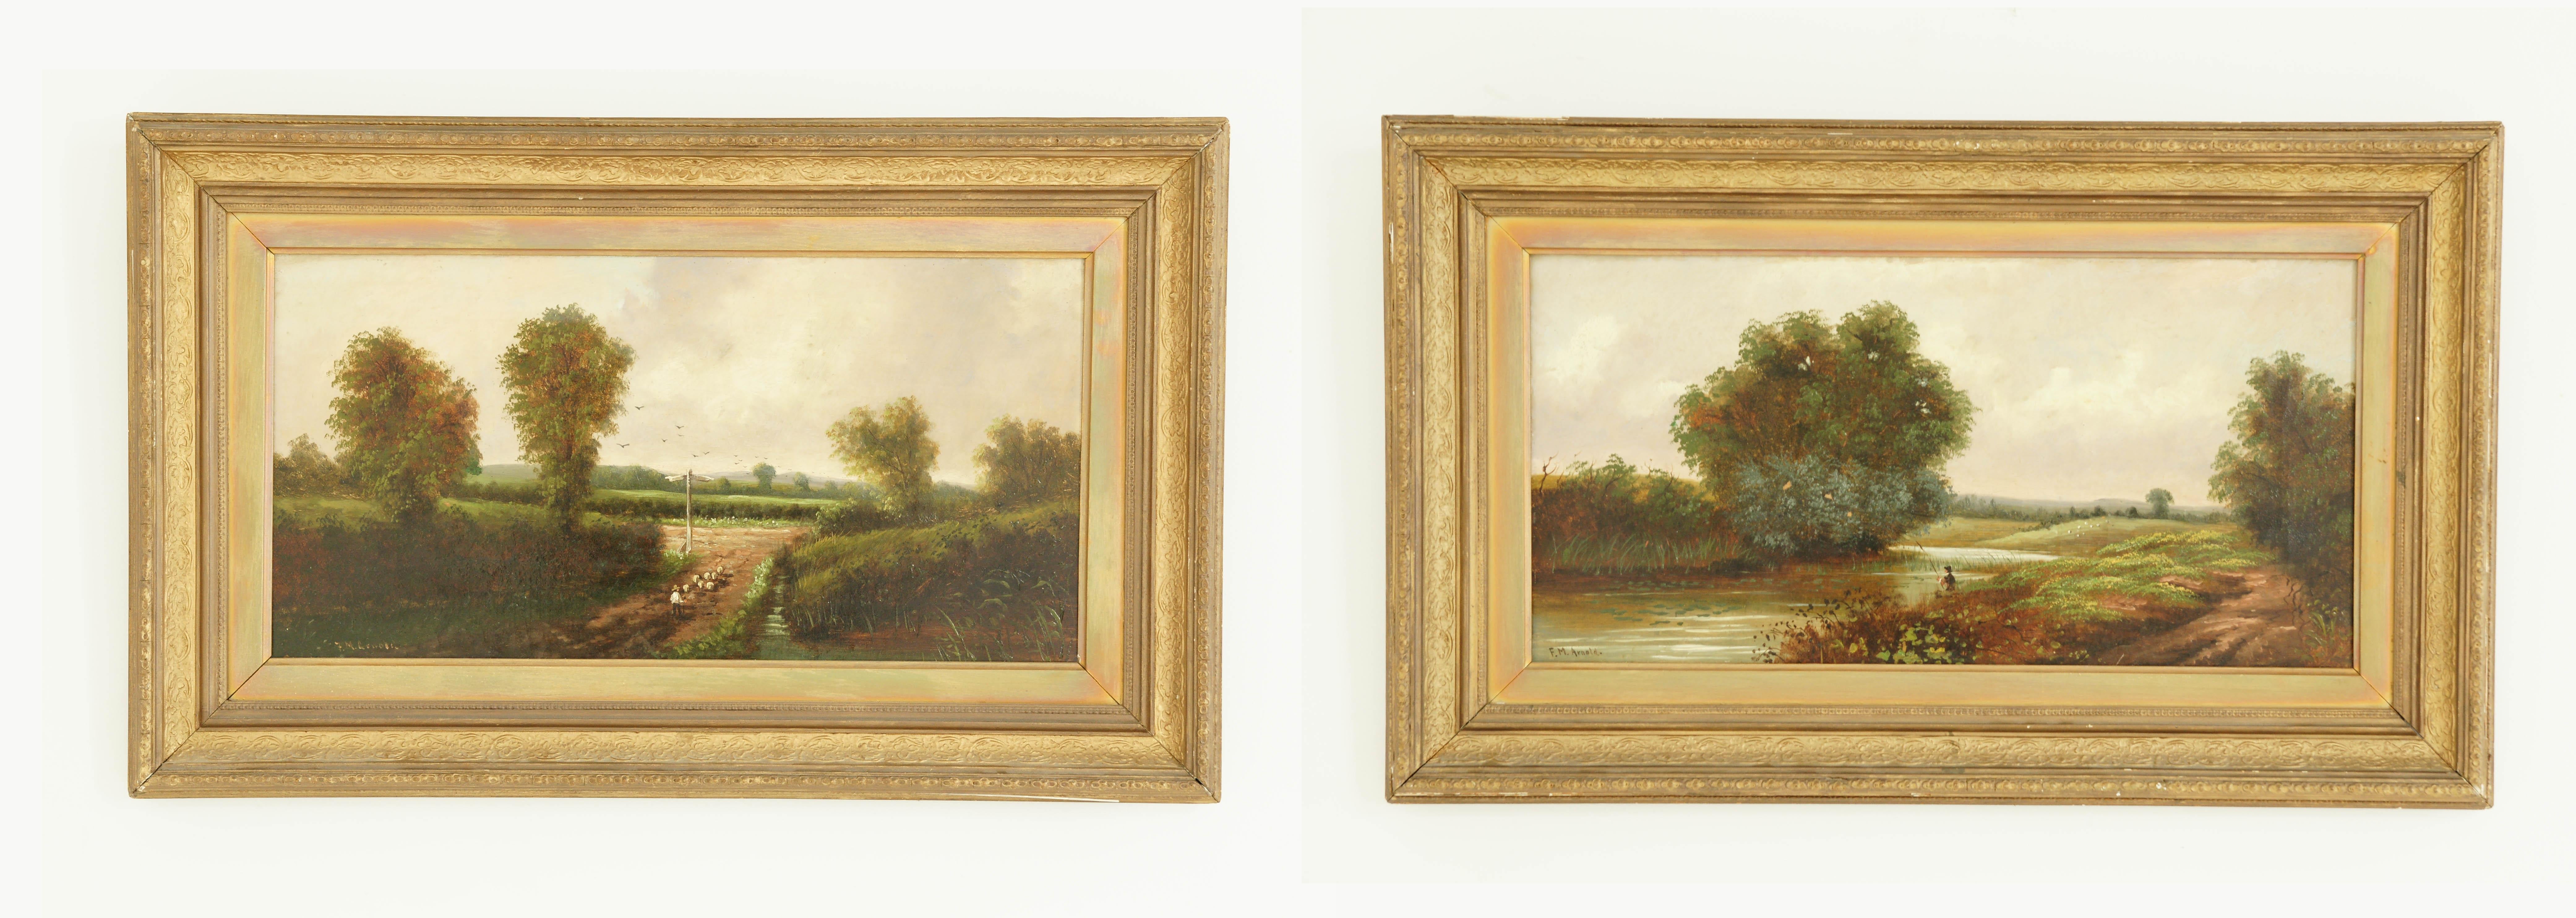 Pair of Antique Paintings, Antique Oil Paintings, Scenics, Scotland 1870, B1529 10